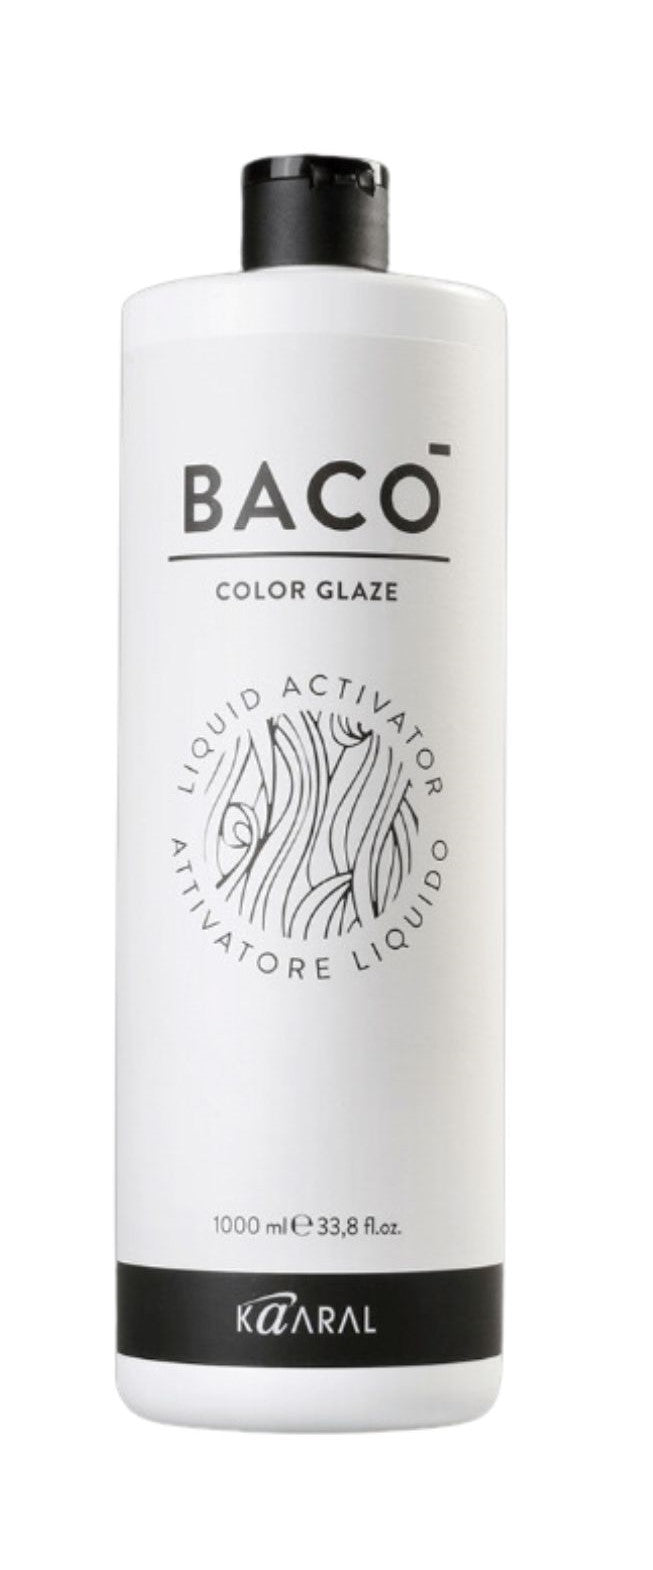 Baco color glaze Activator